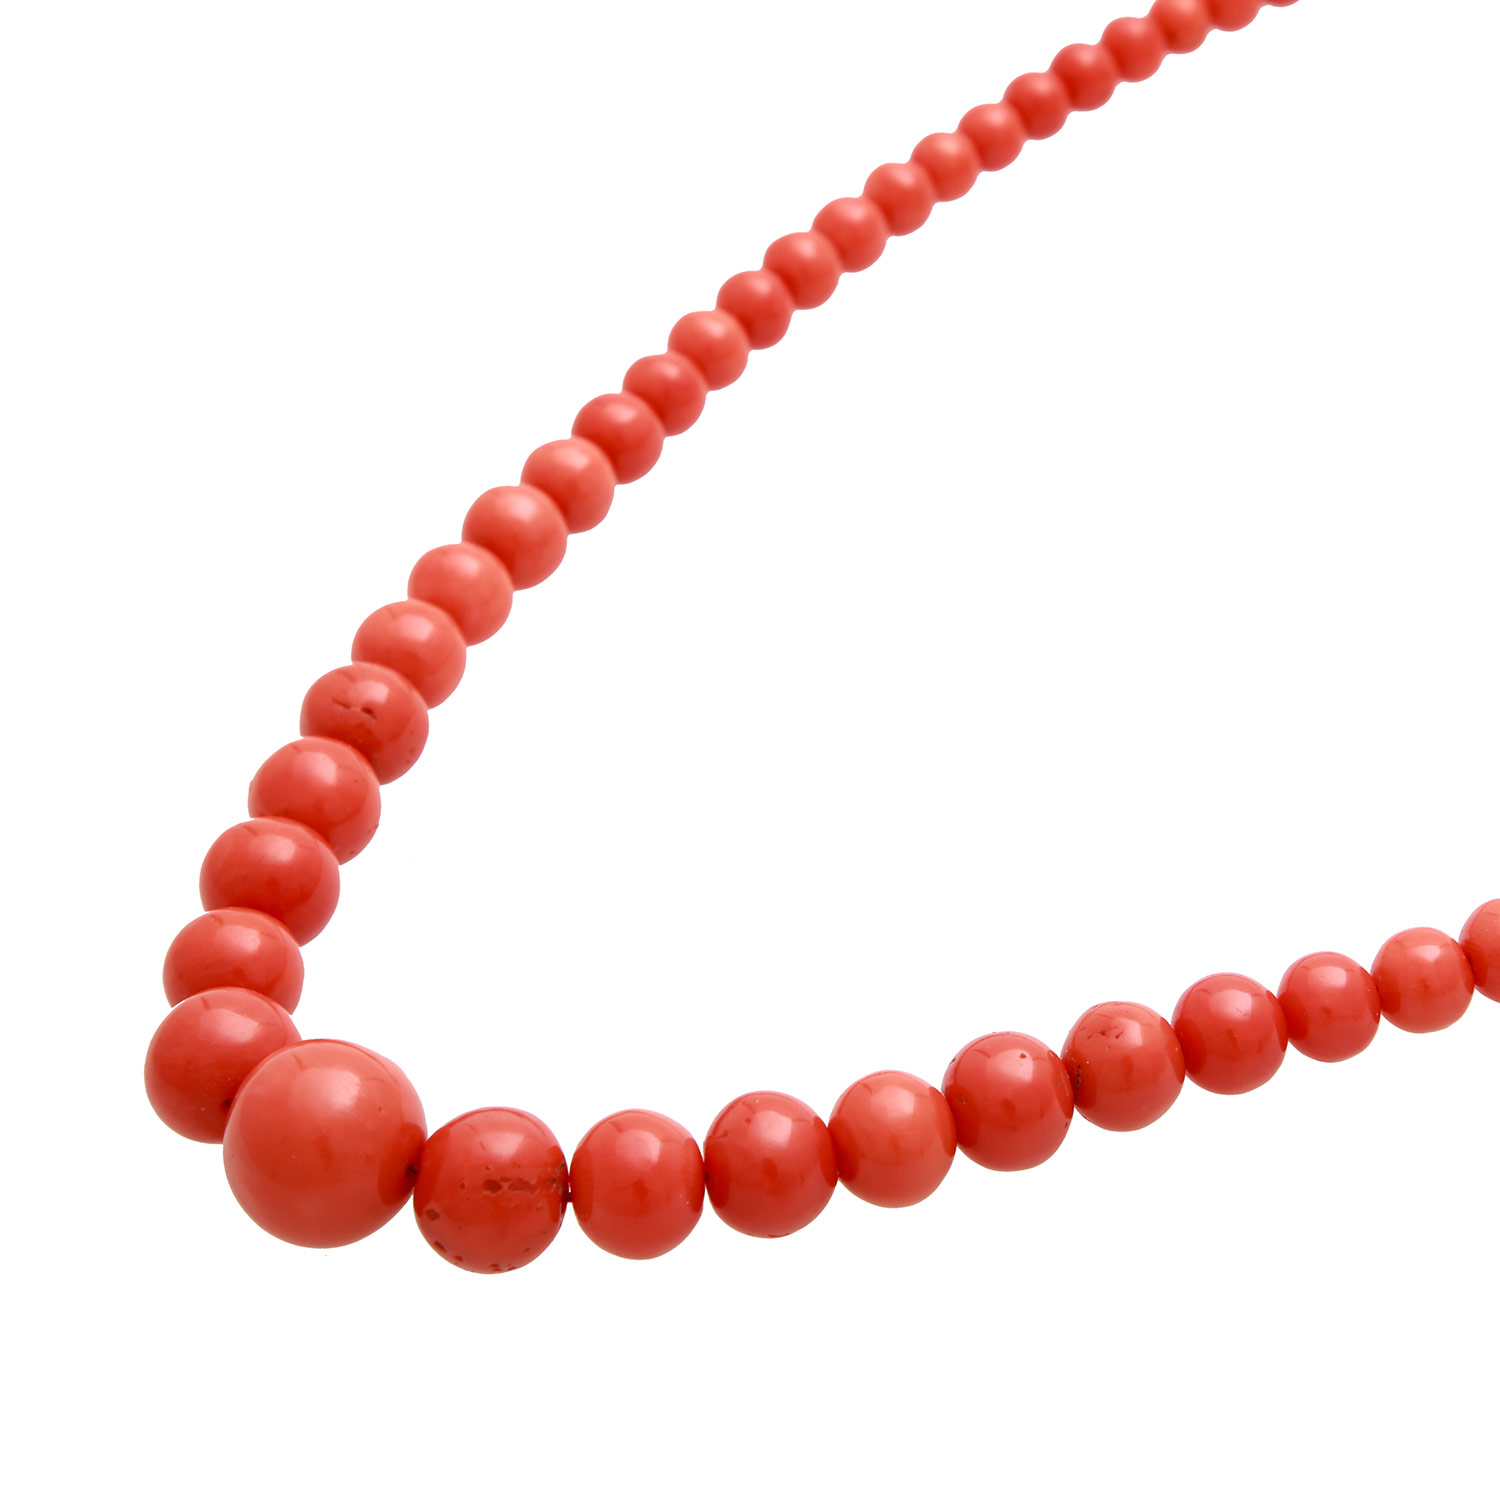 Collier aus roten Korallenkugeln im Verlaufca. 5,5 - 14 mm, Federring, L: ca. 53 cm, Tragespuren, - Image 4 of 4